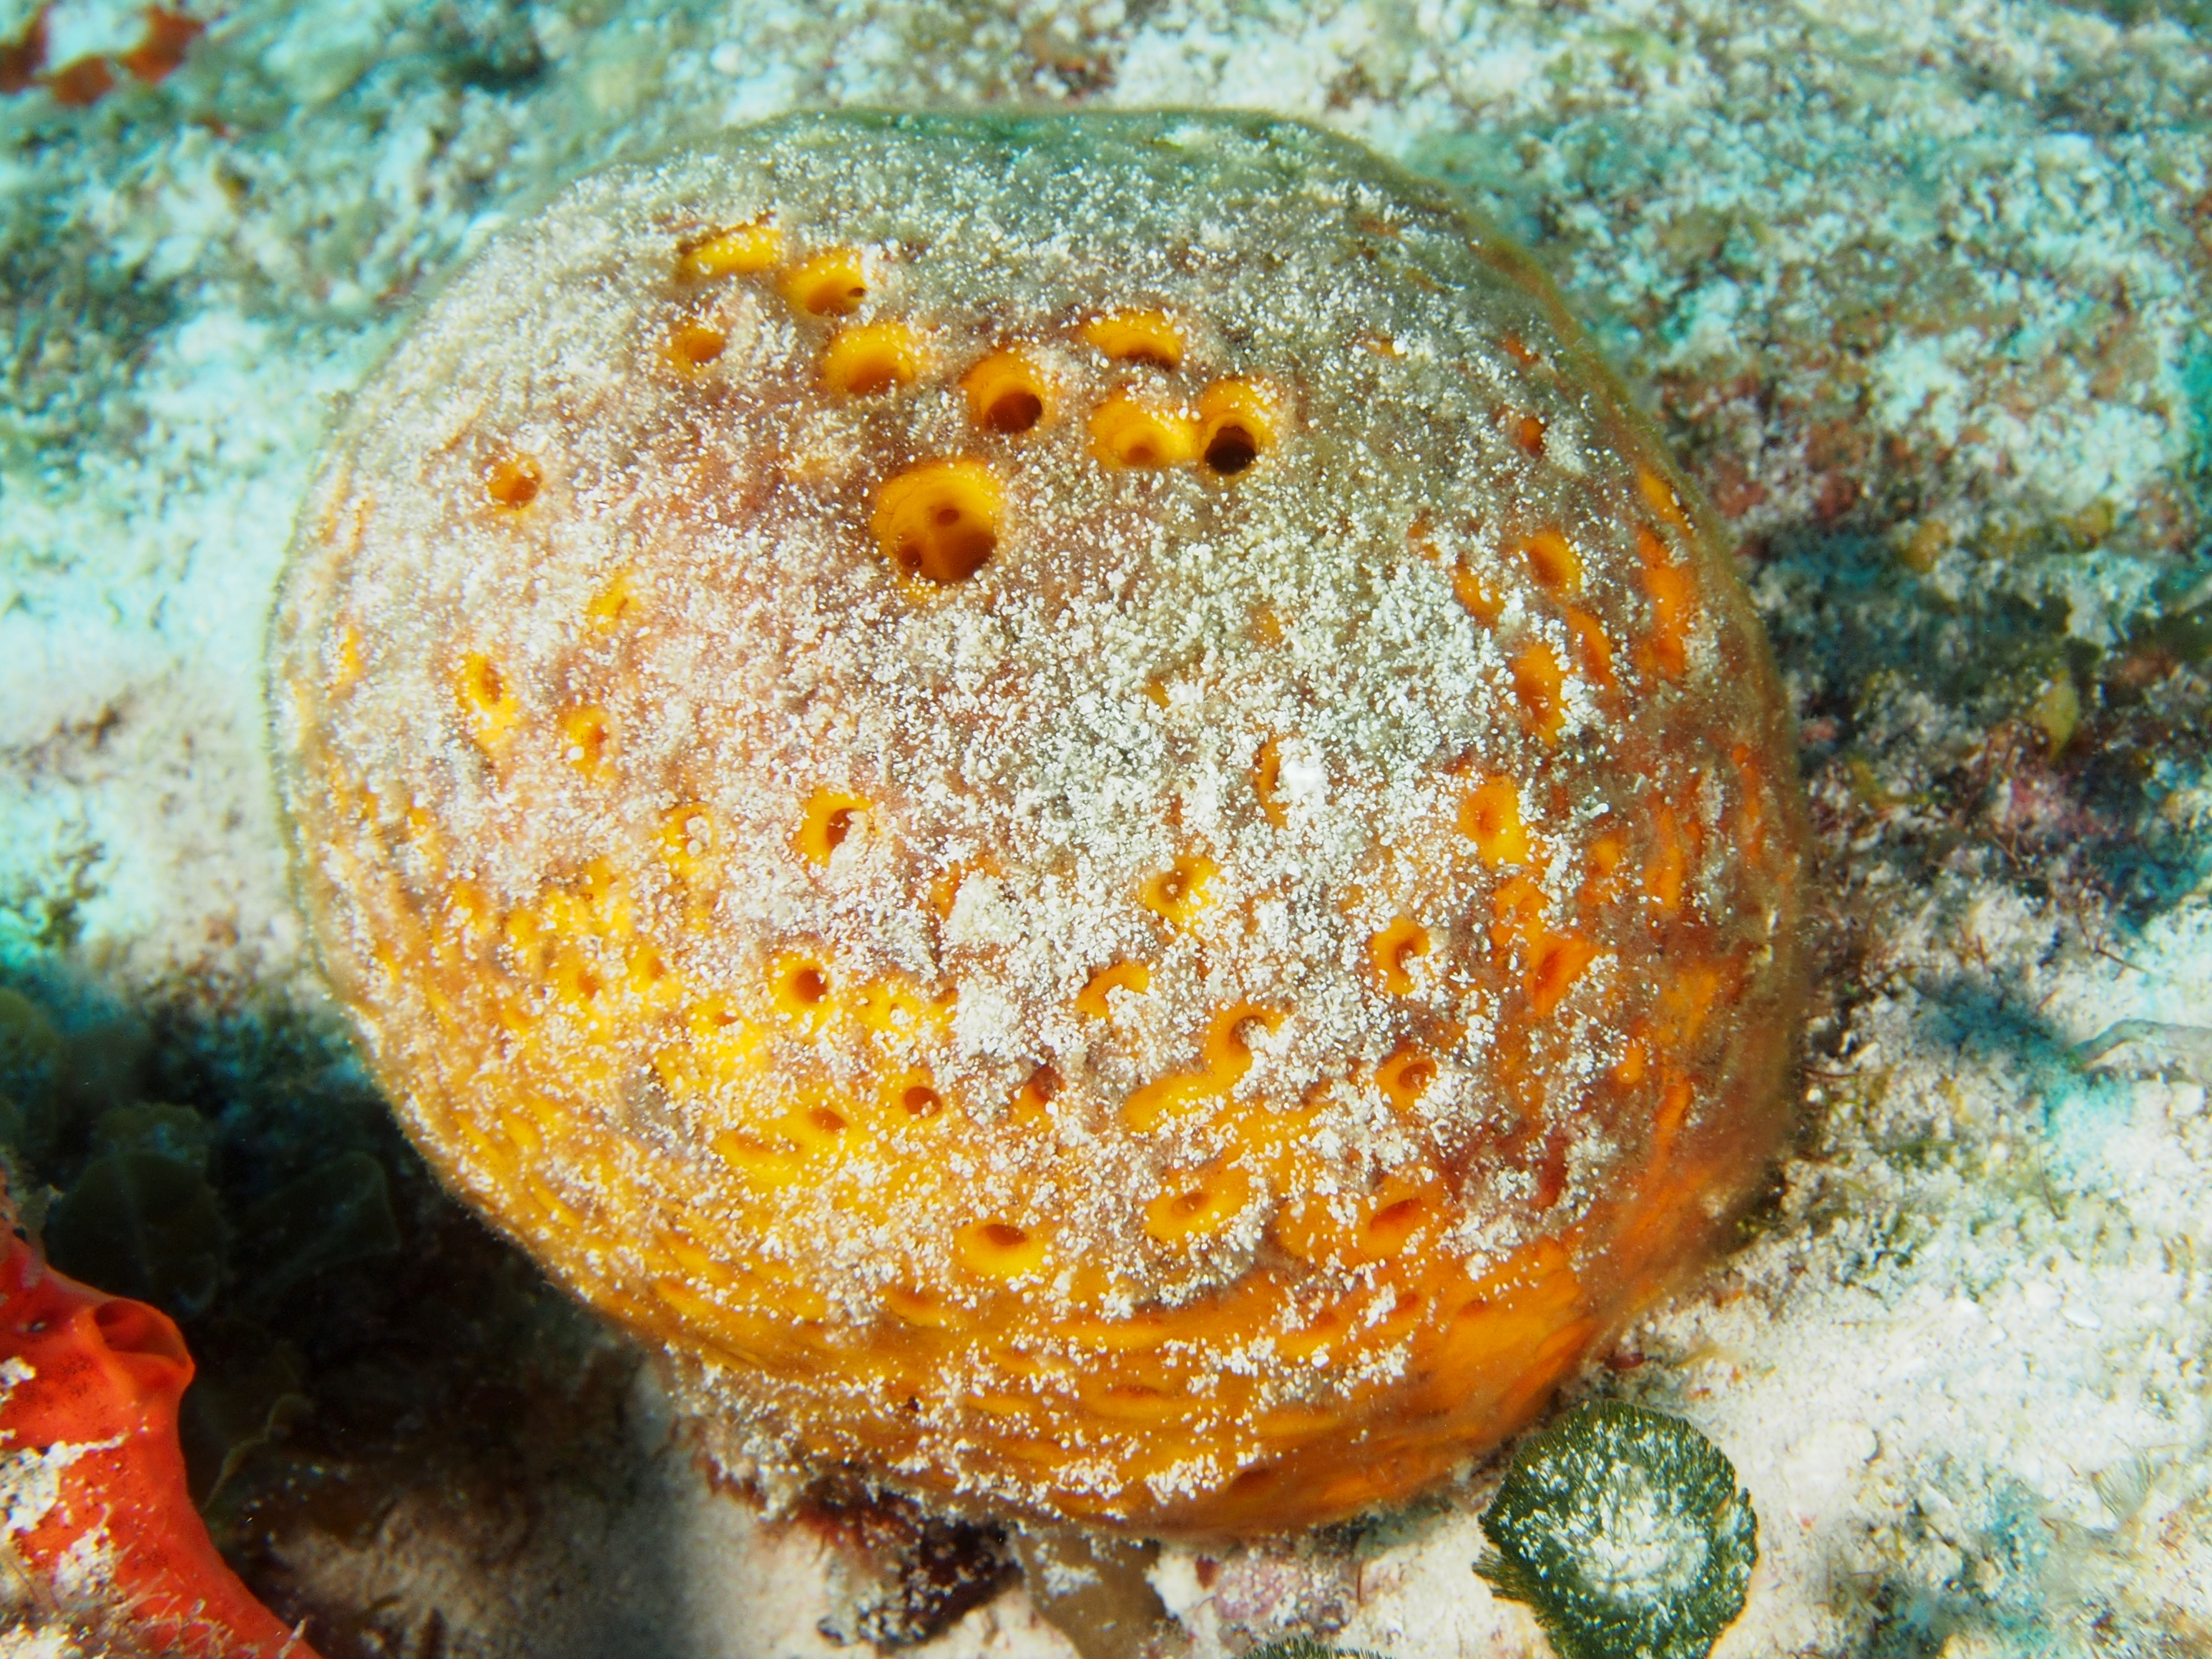 Orange Ball Sponge - Cinachyrella kuekenthali